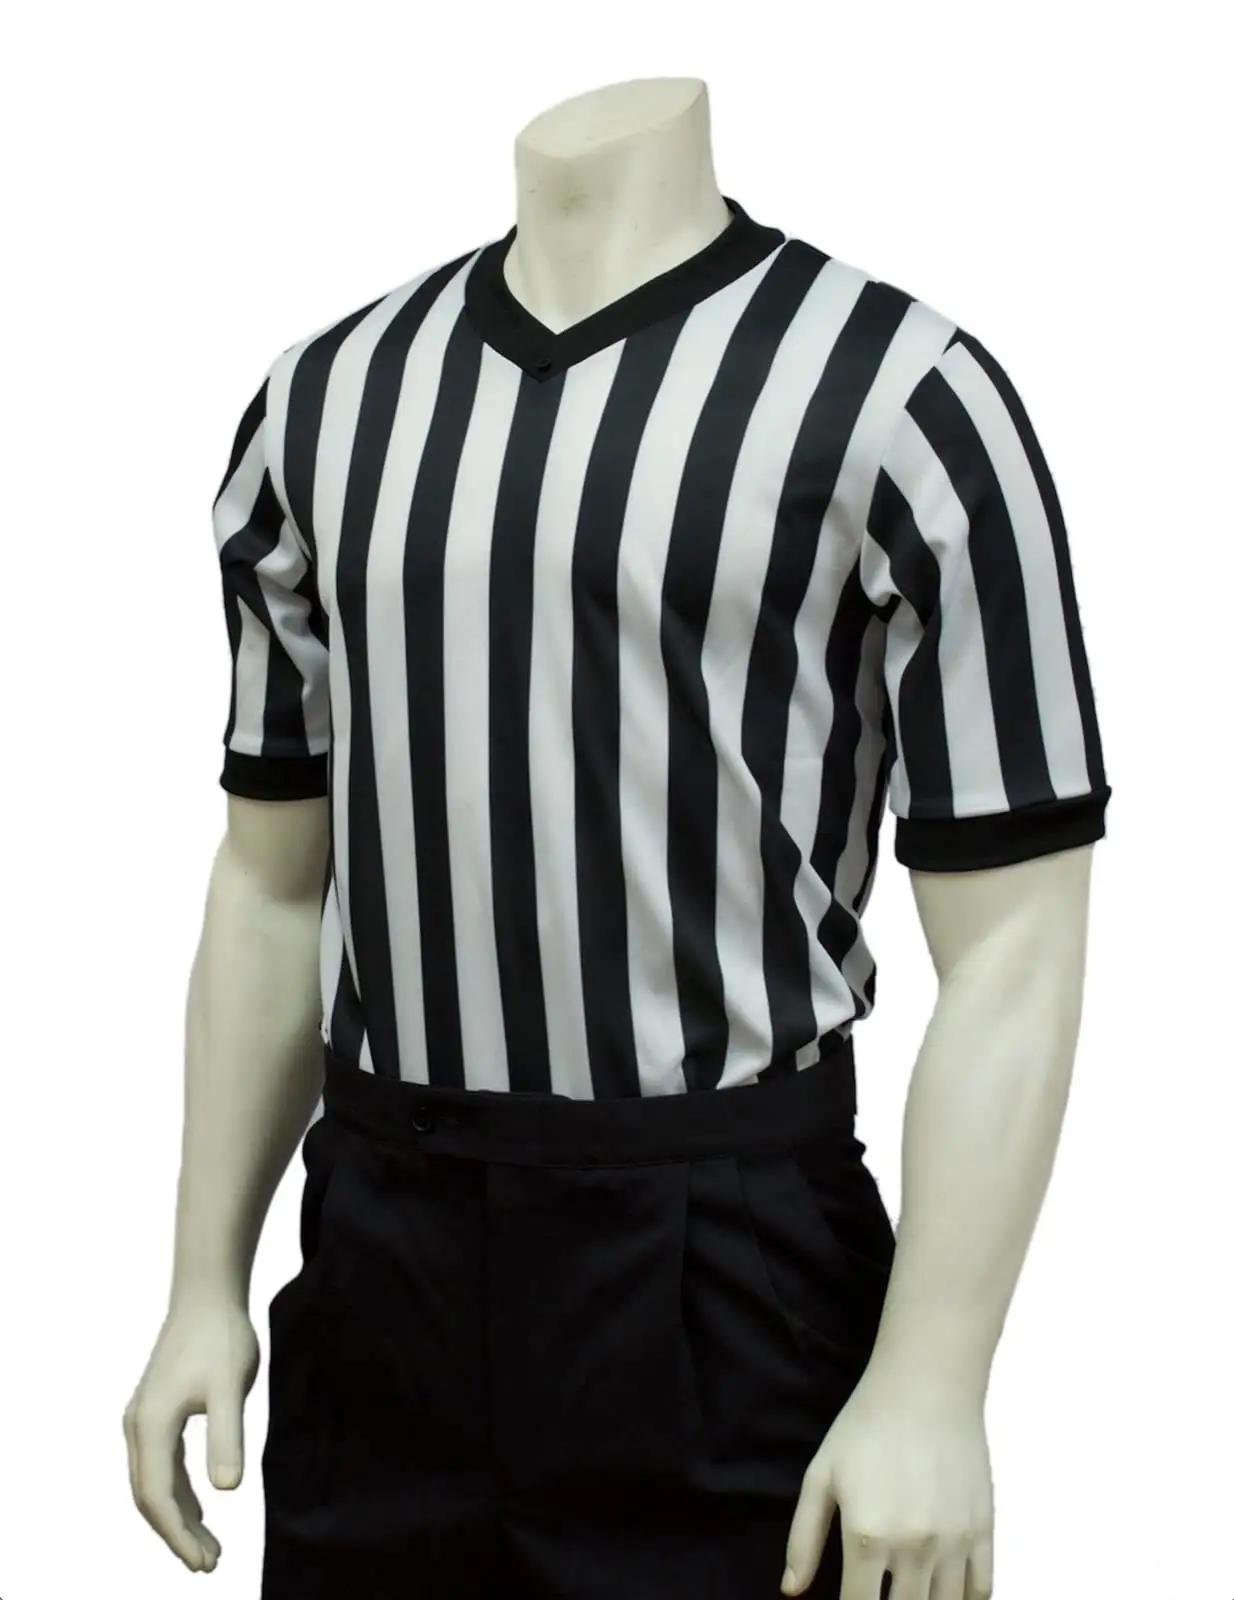 आरामदायक कपड़े बास्केटबॉल फुटबॉल वॉलीबॉल रेफरी वर्दी रेफरी वर्दी वी-गर्दन काले सफेद धारीदार रेफरी शर्ट